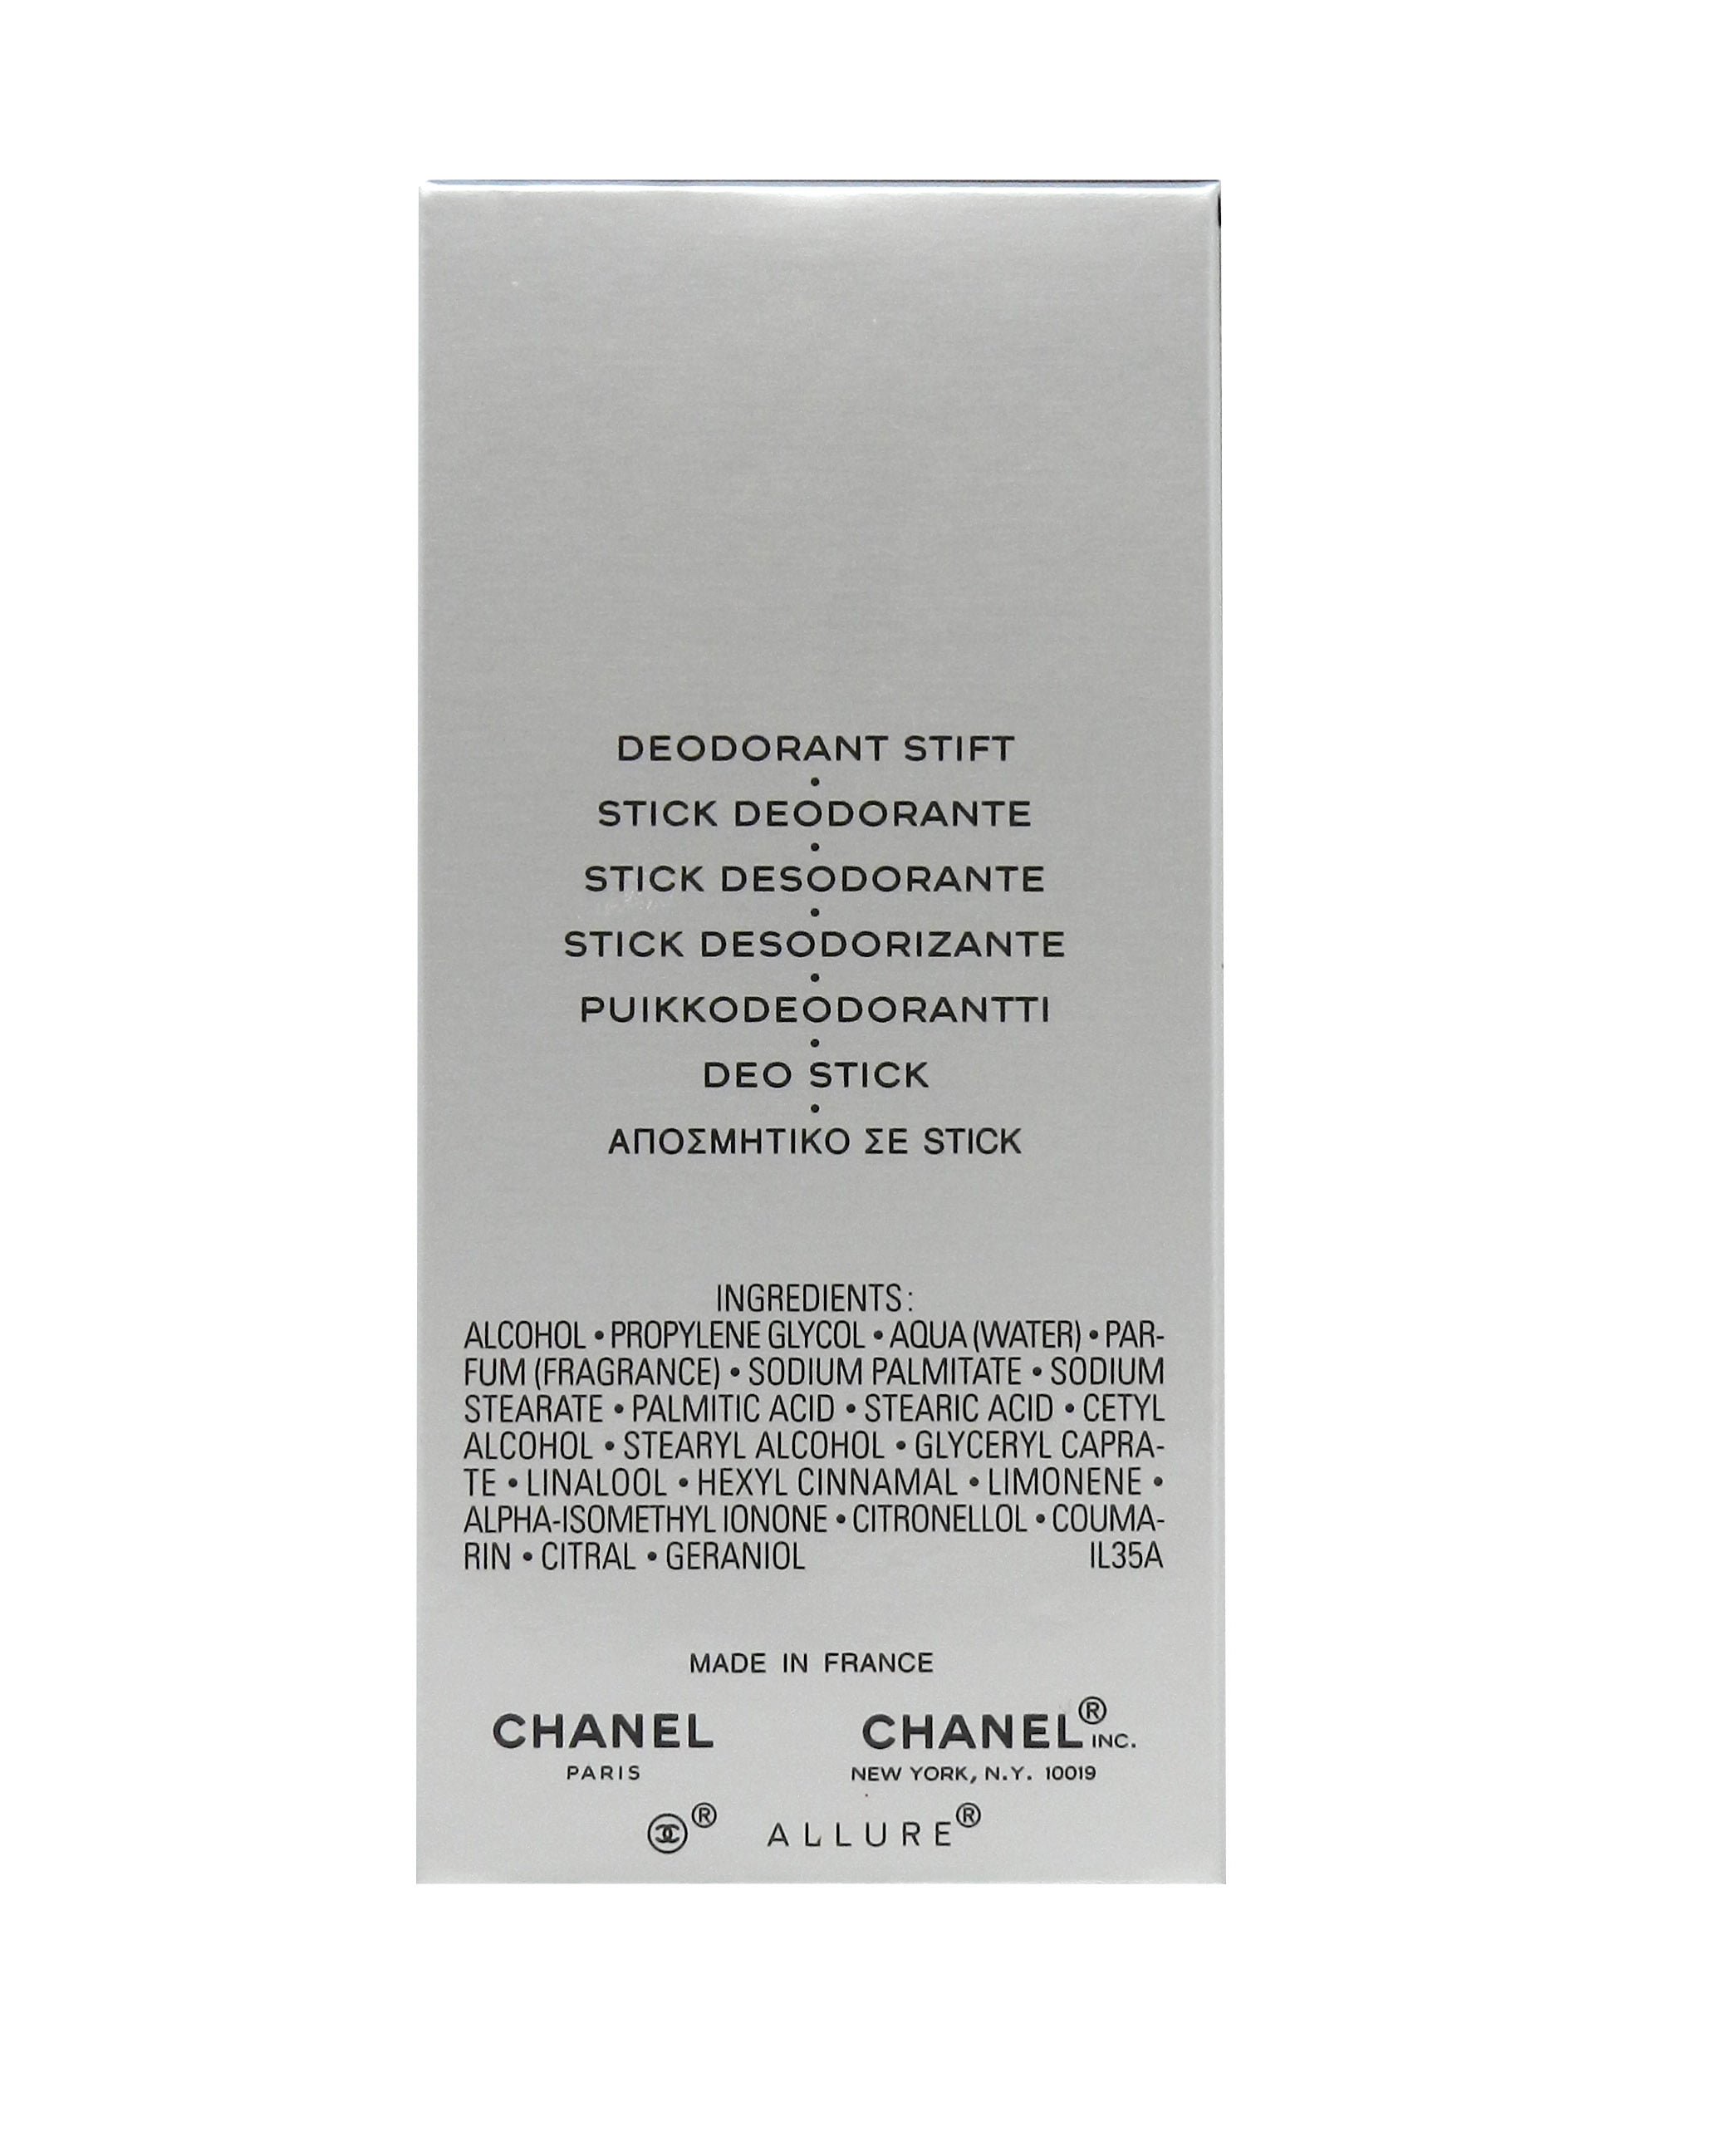 Chanel Allure Homme Sport Deostick 2.5fl oz • Price »